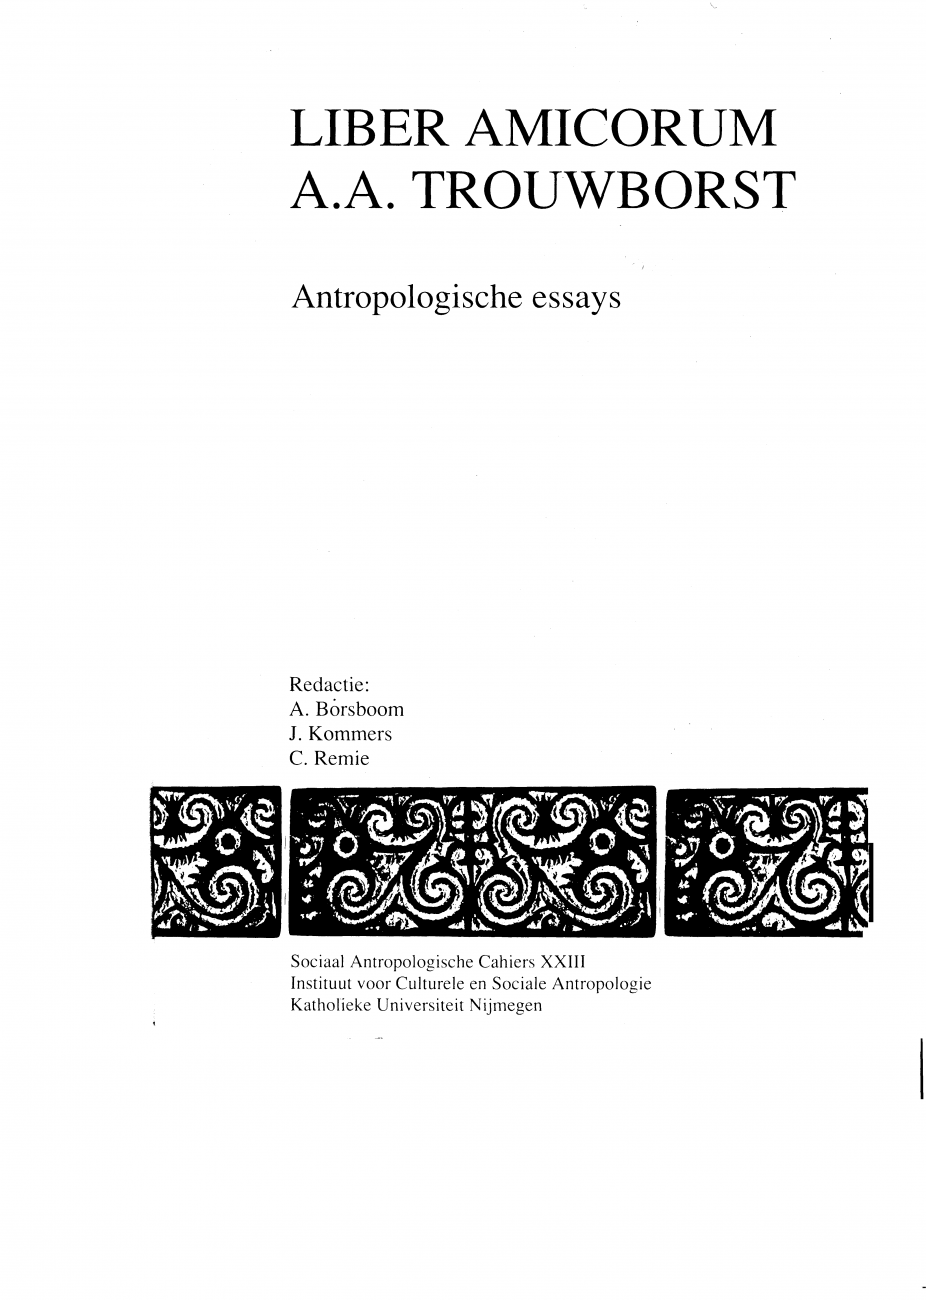 BK/3000/5 - 
Liber Amicorum A.A. Trouwborst: Antroplologische Essays
